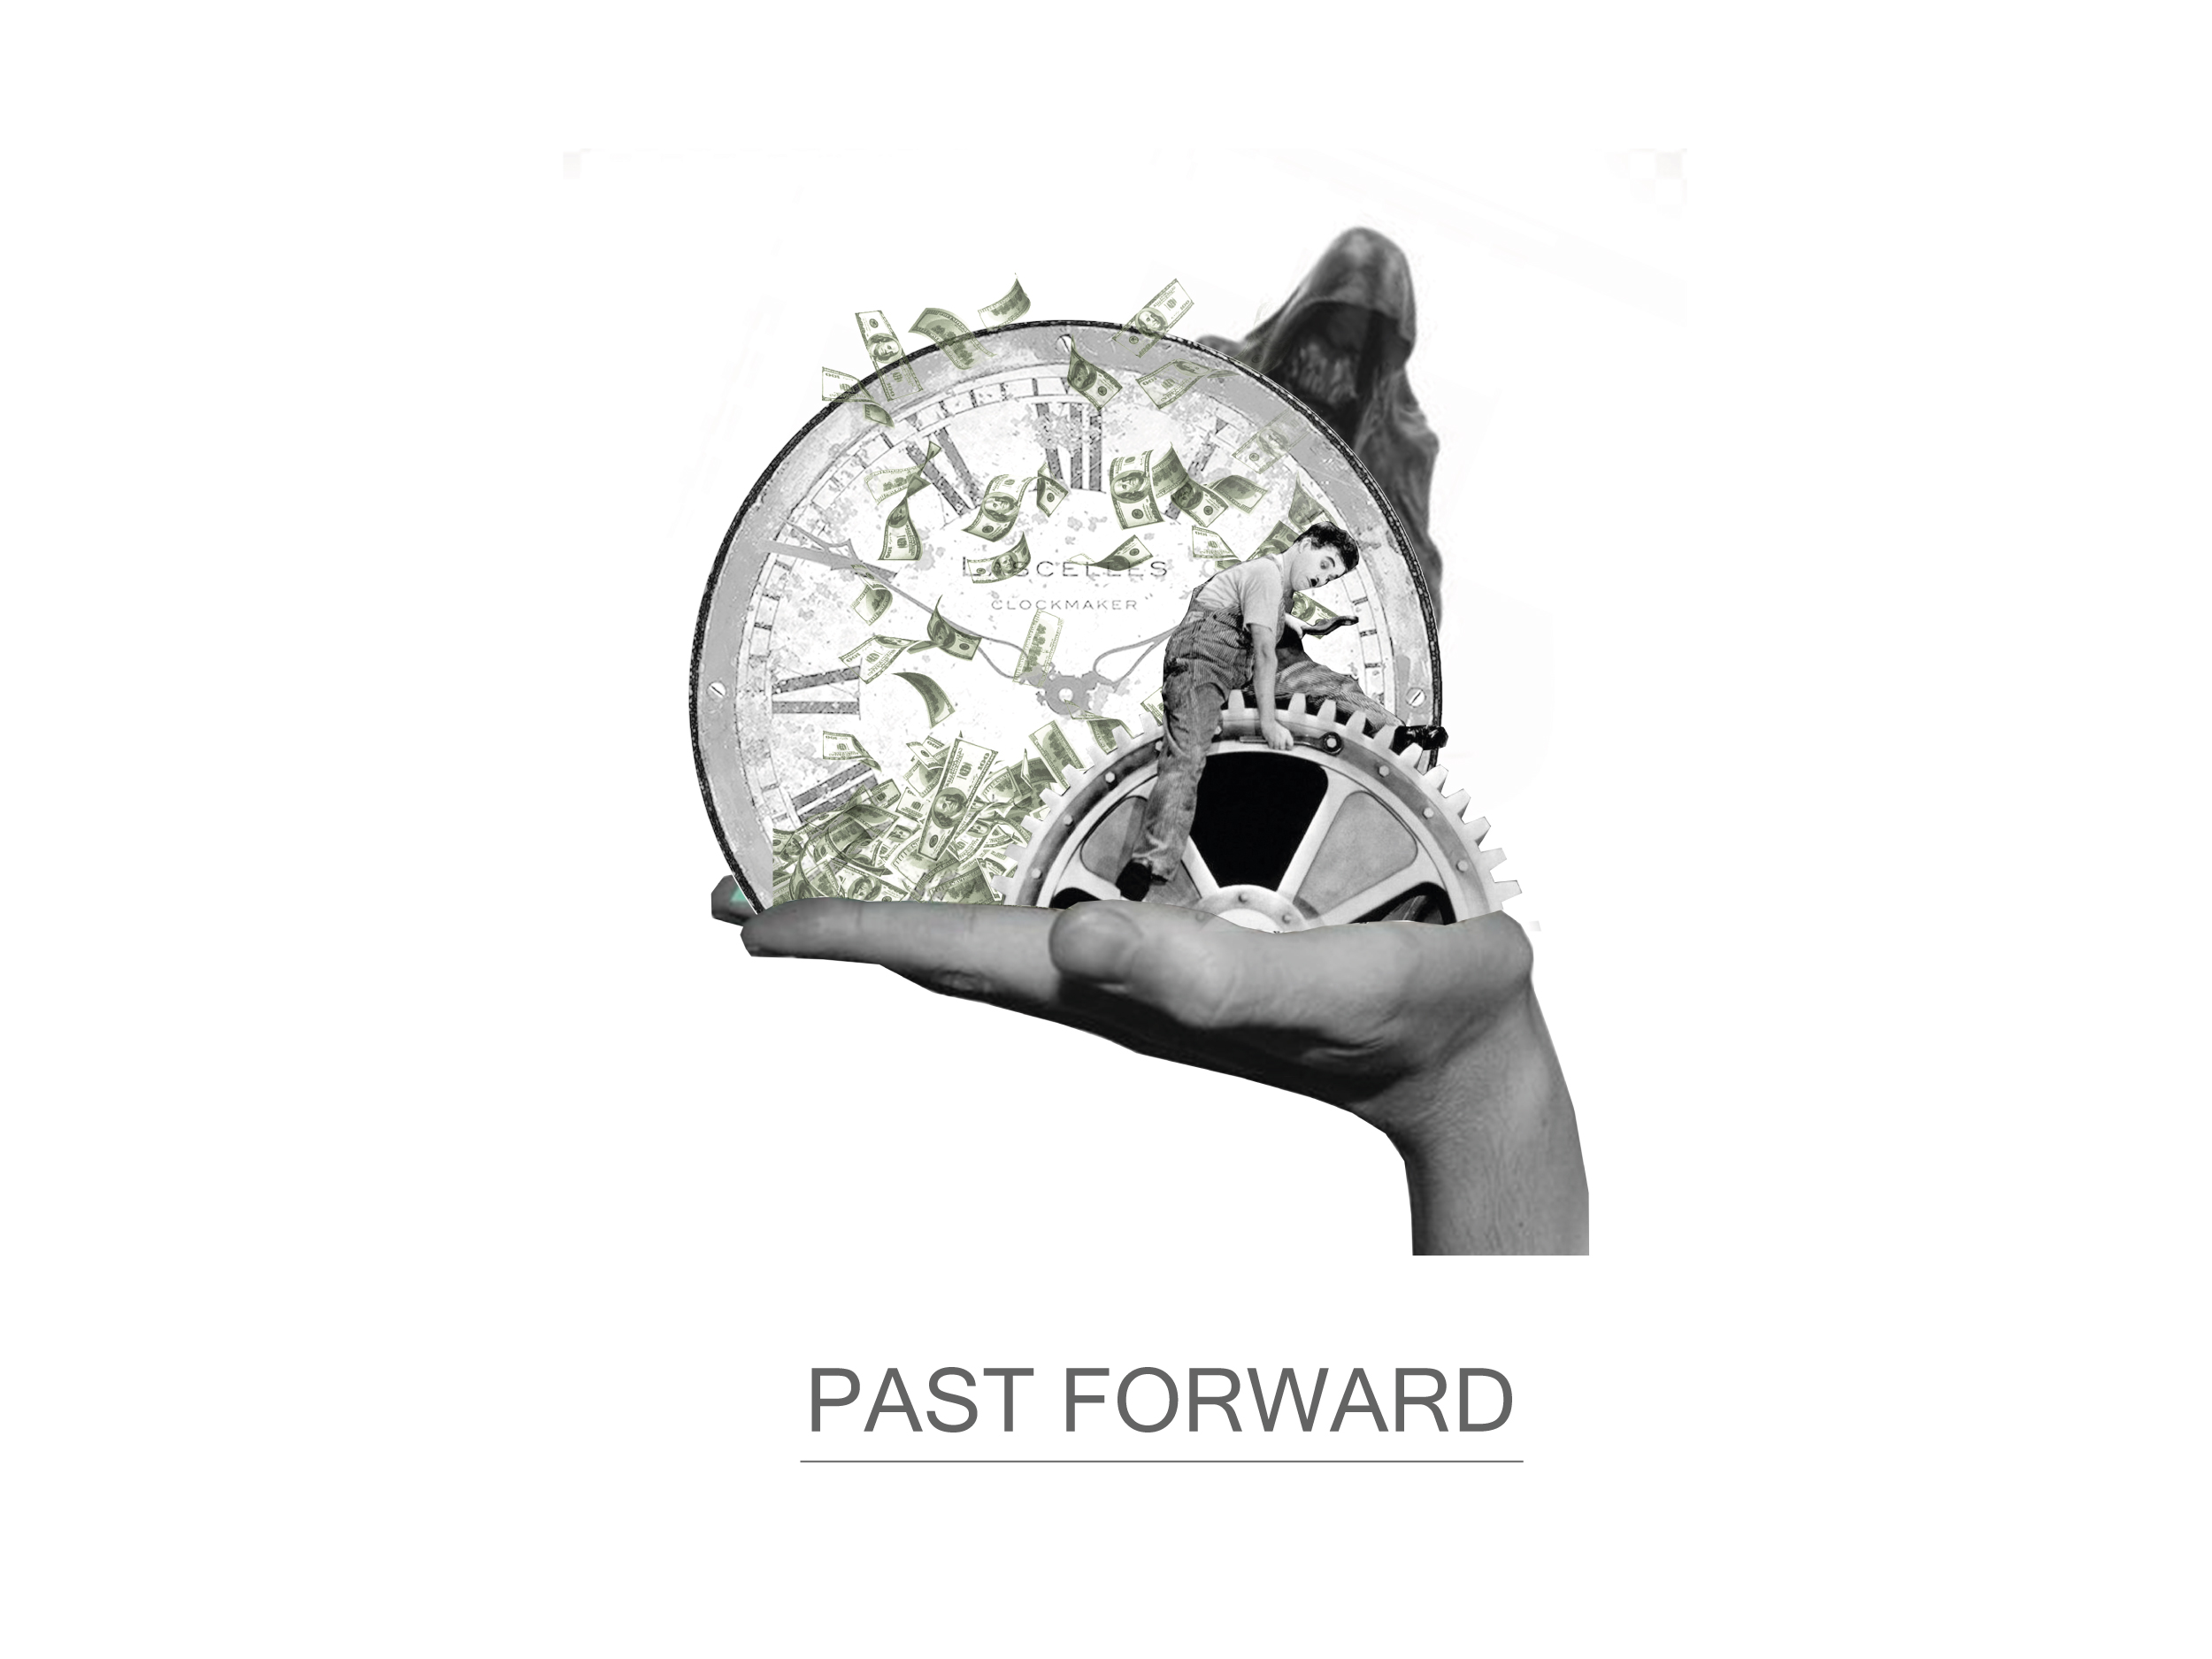 Past Forward